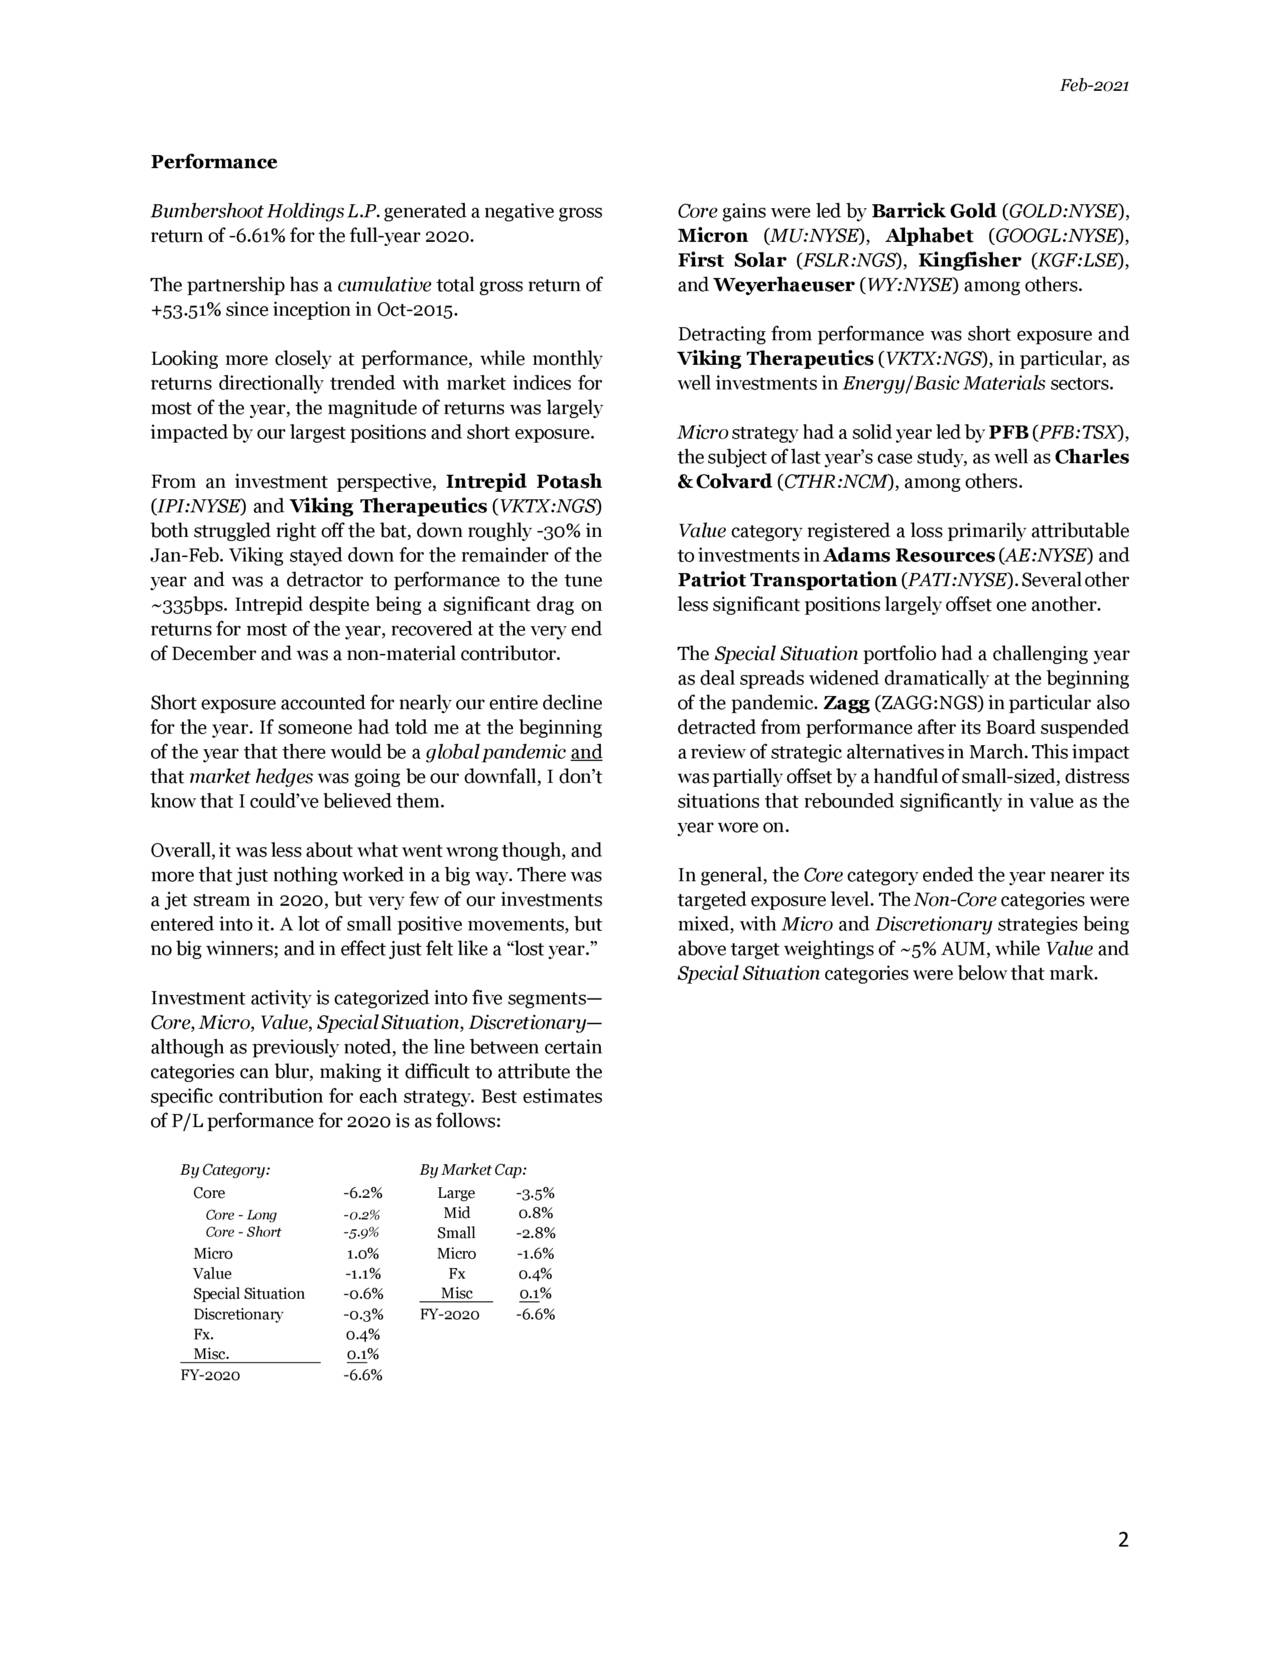 Bumbershoot Holdings 2020 Investor Letter (NASDAQCTHR) Seeking Alpha